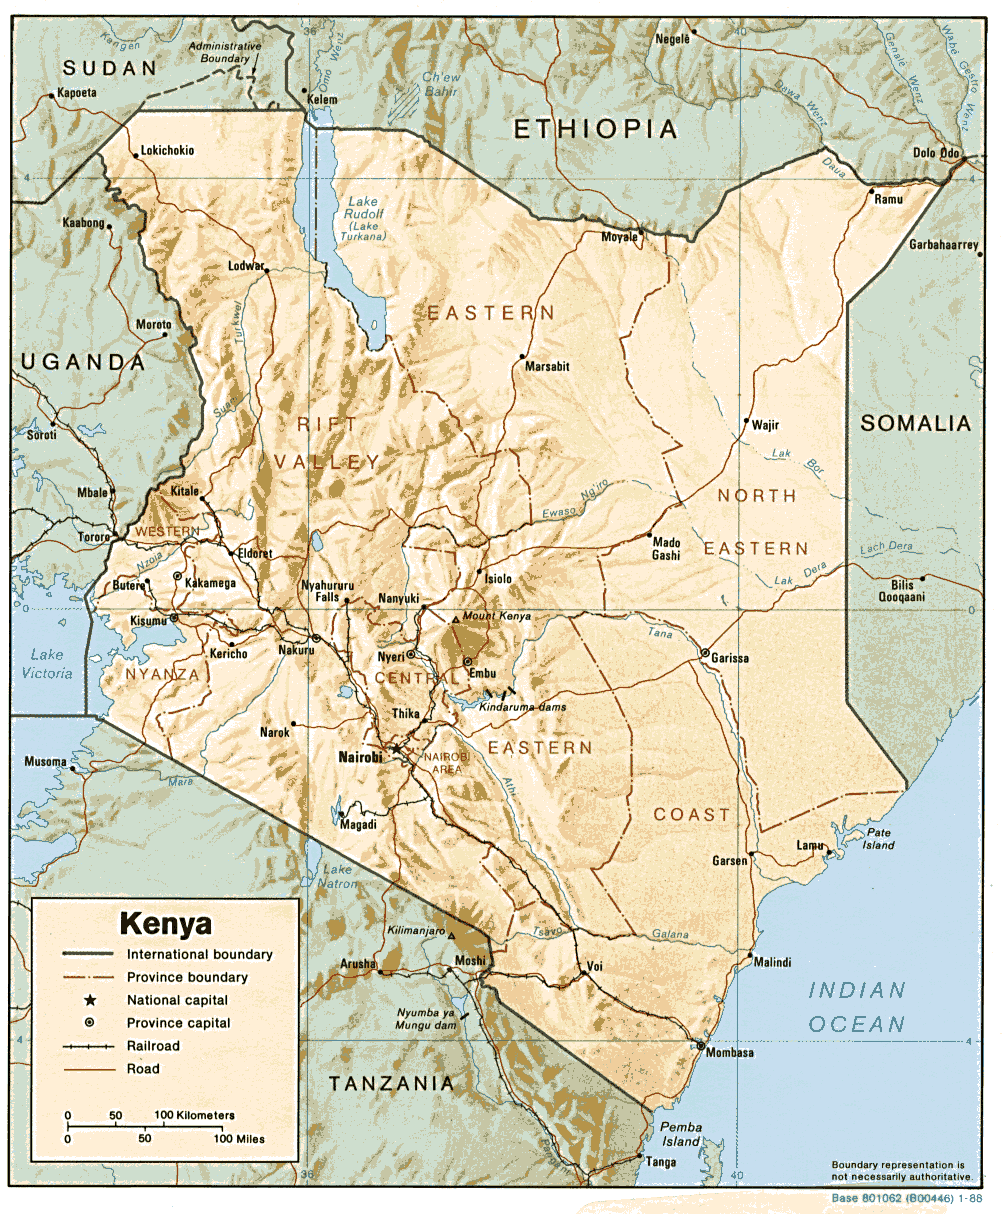 http://www.lib.utexas.edu/maps/africa/kenya.gif